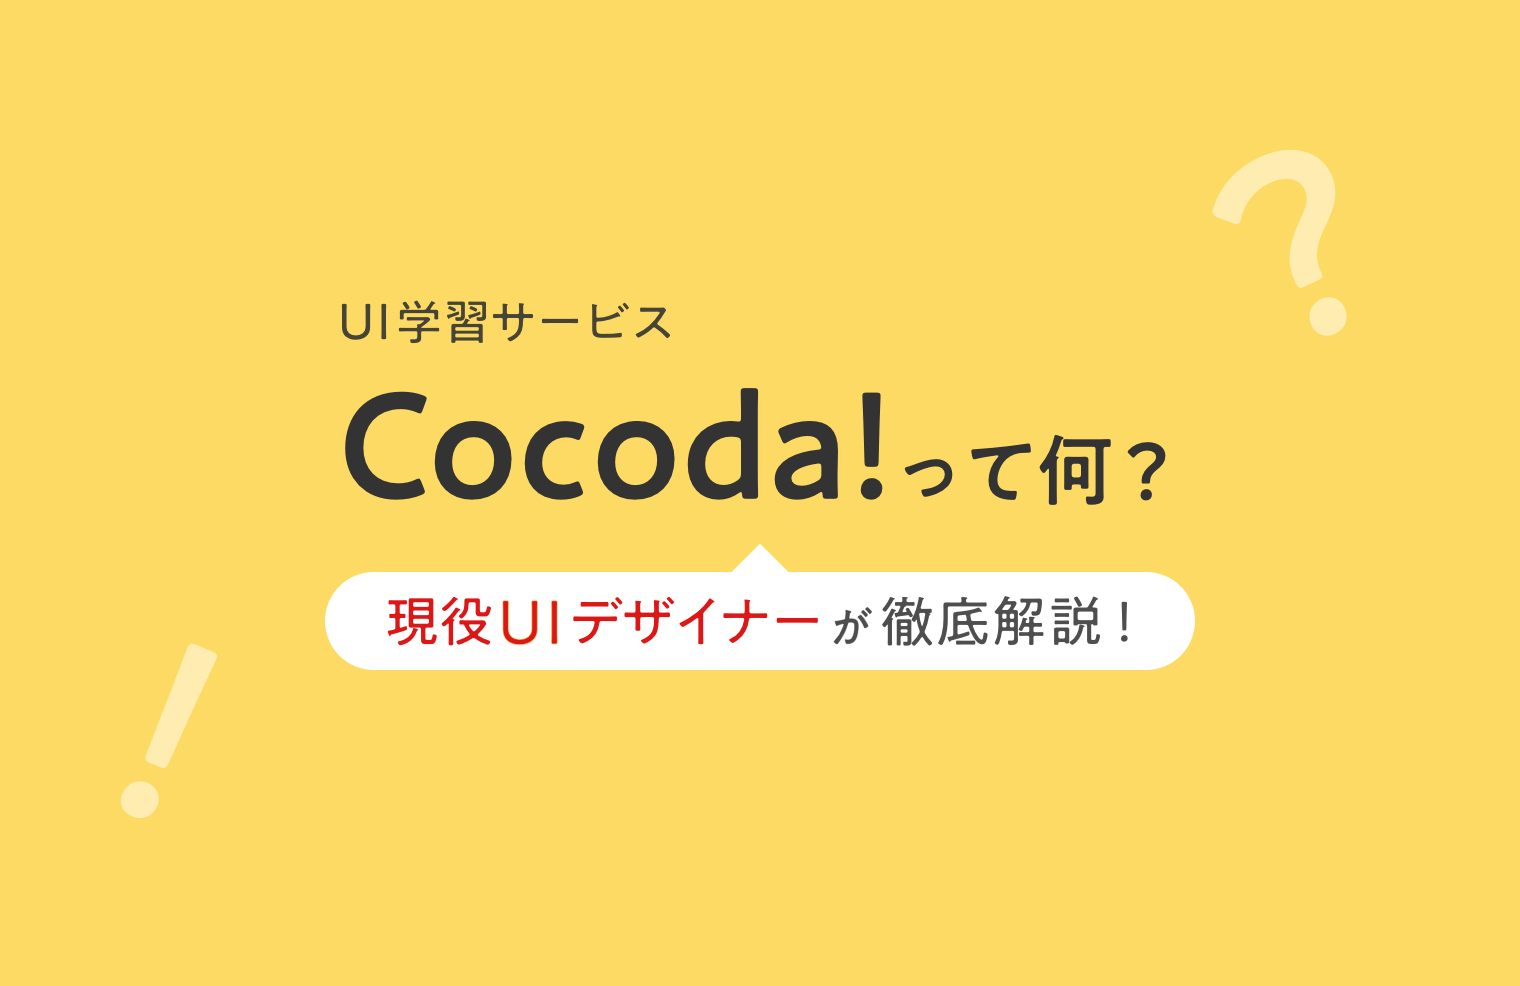 UI学習サービス「Cocoda!」ってなに？ 現役UIデザイナーが徹底解説！